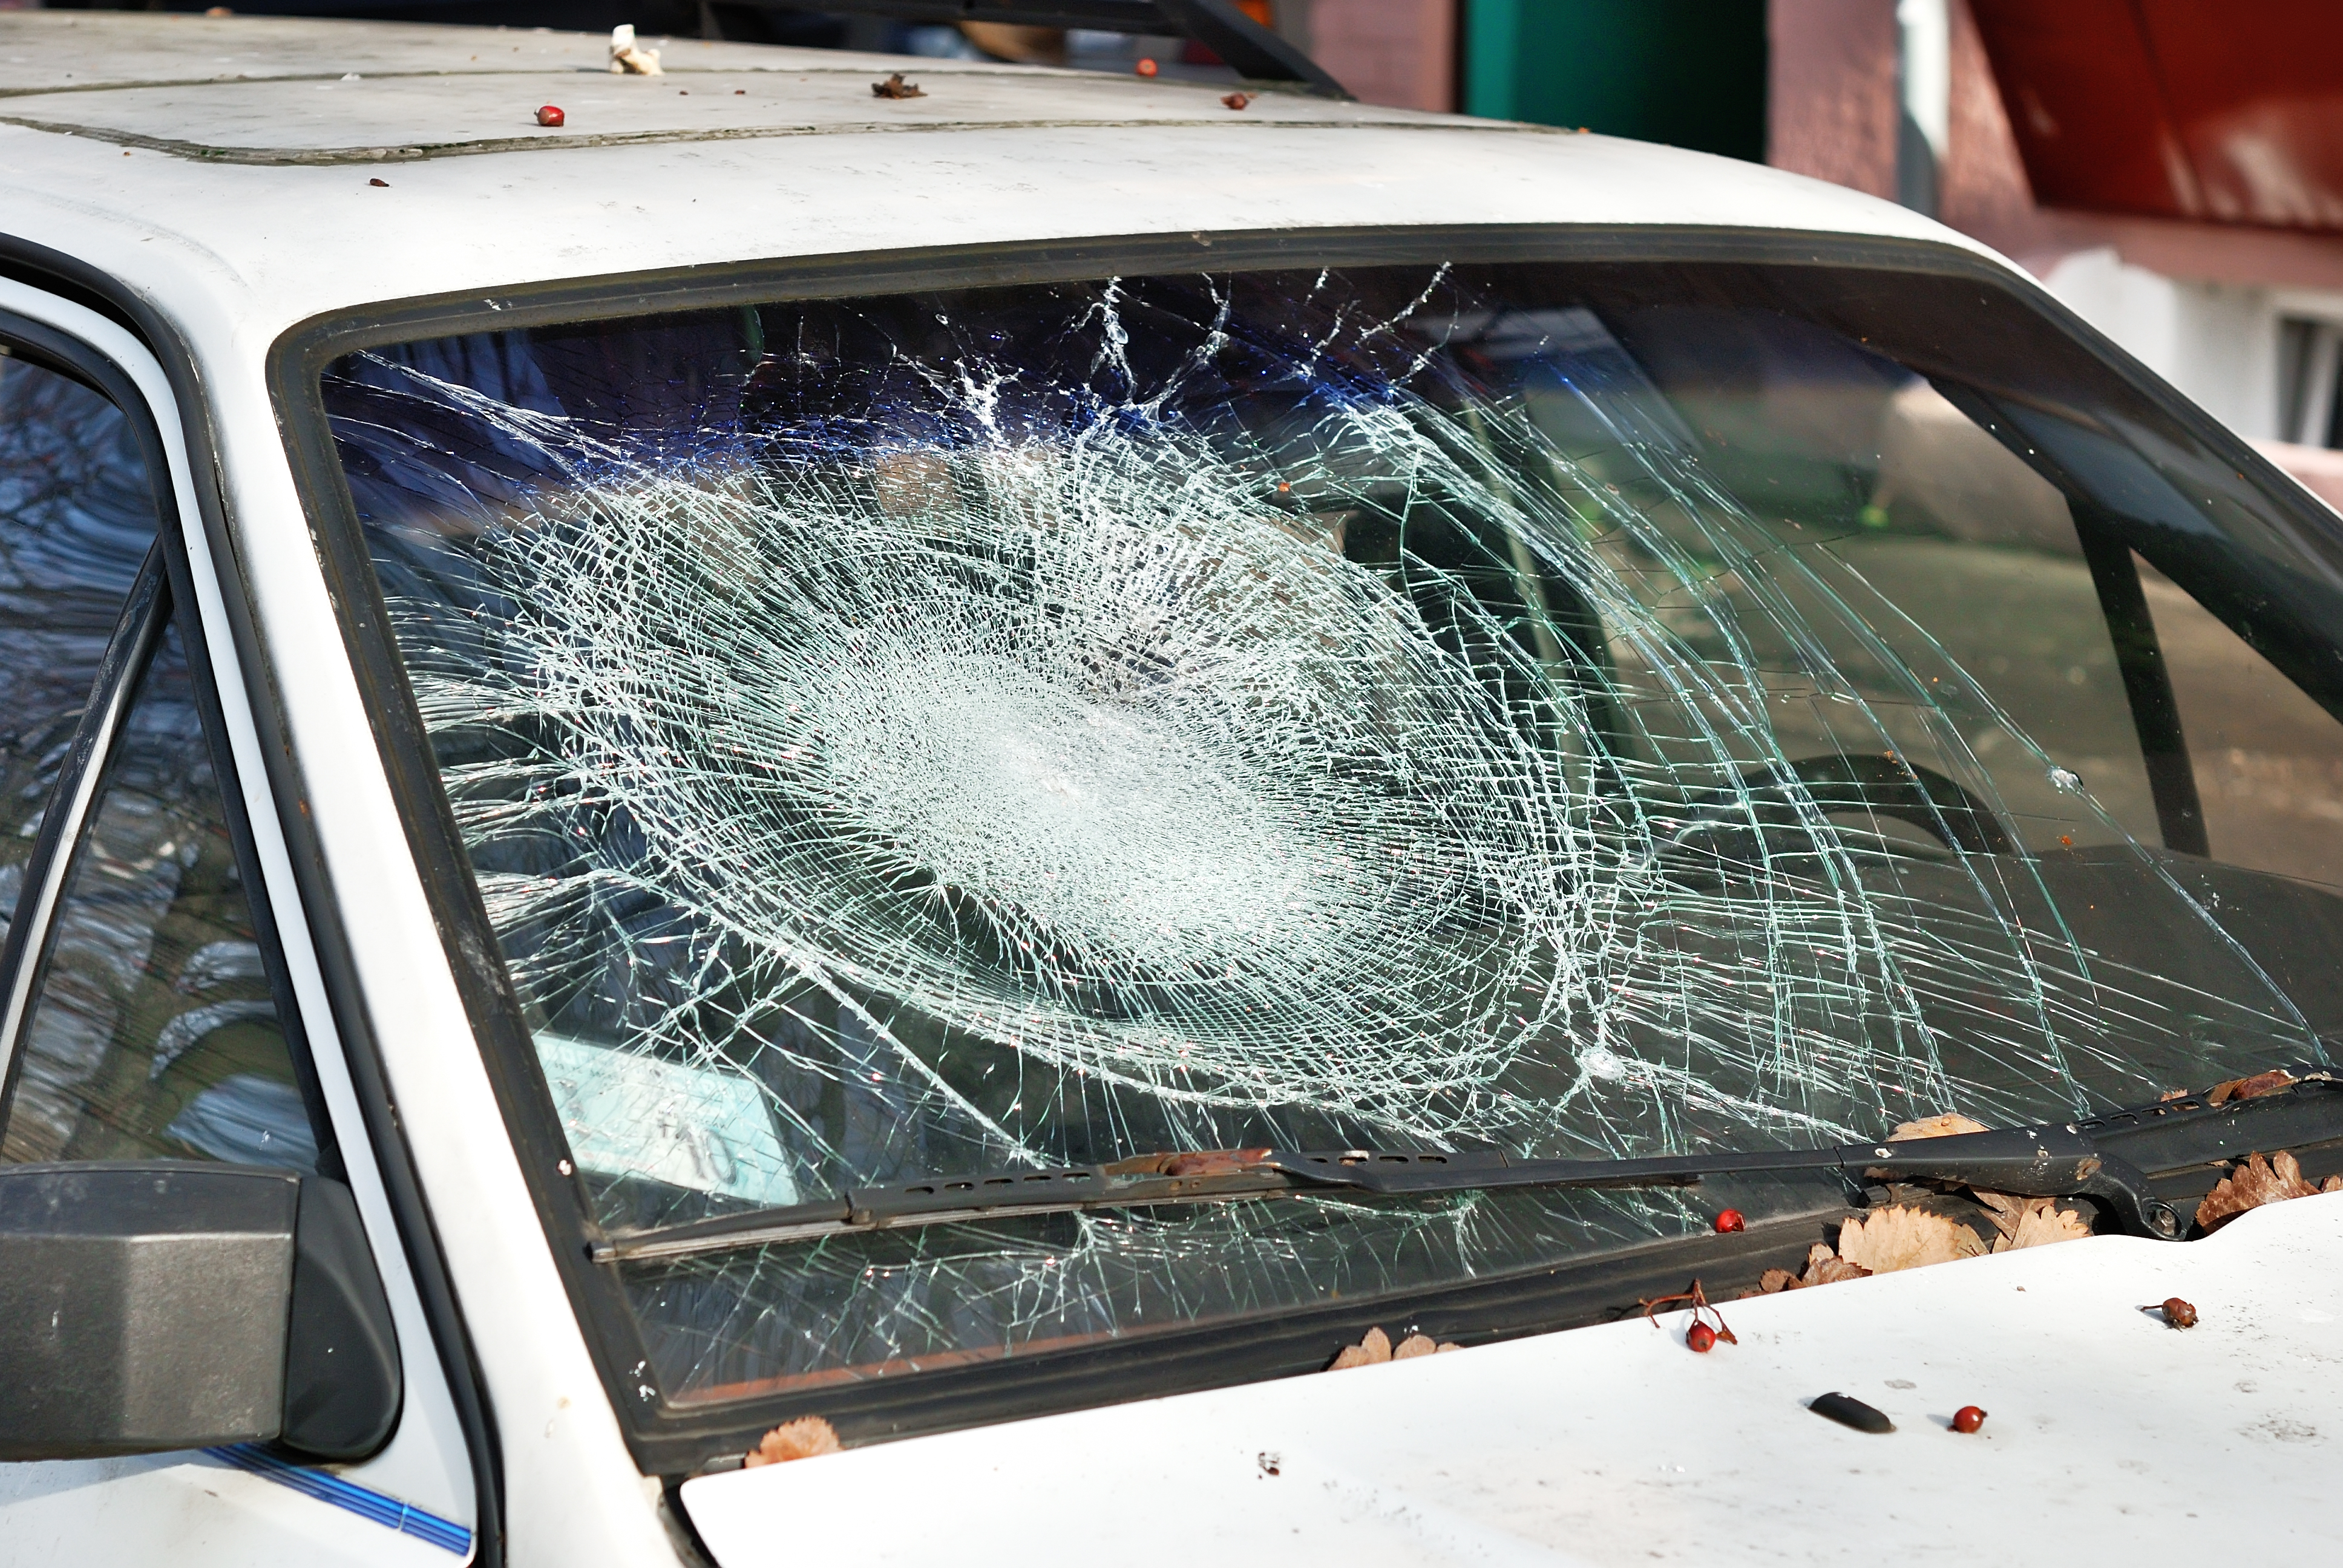 Авто трещина. Разбитое лобовое ВАЗ 2109. Разбитое стекло автомобиля. Разбитые стекла в машине. Машина с разбитым стеклом.